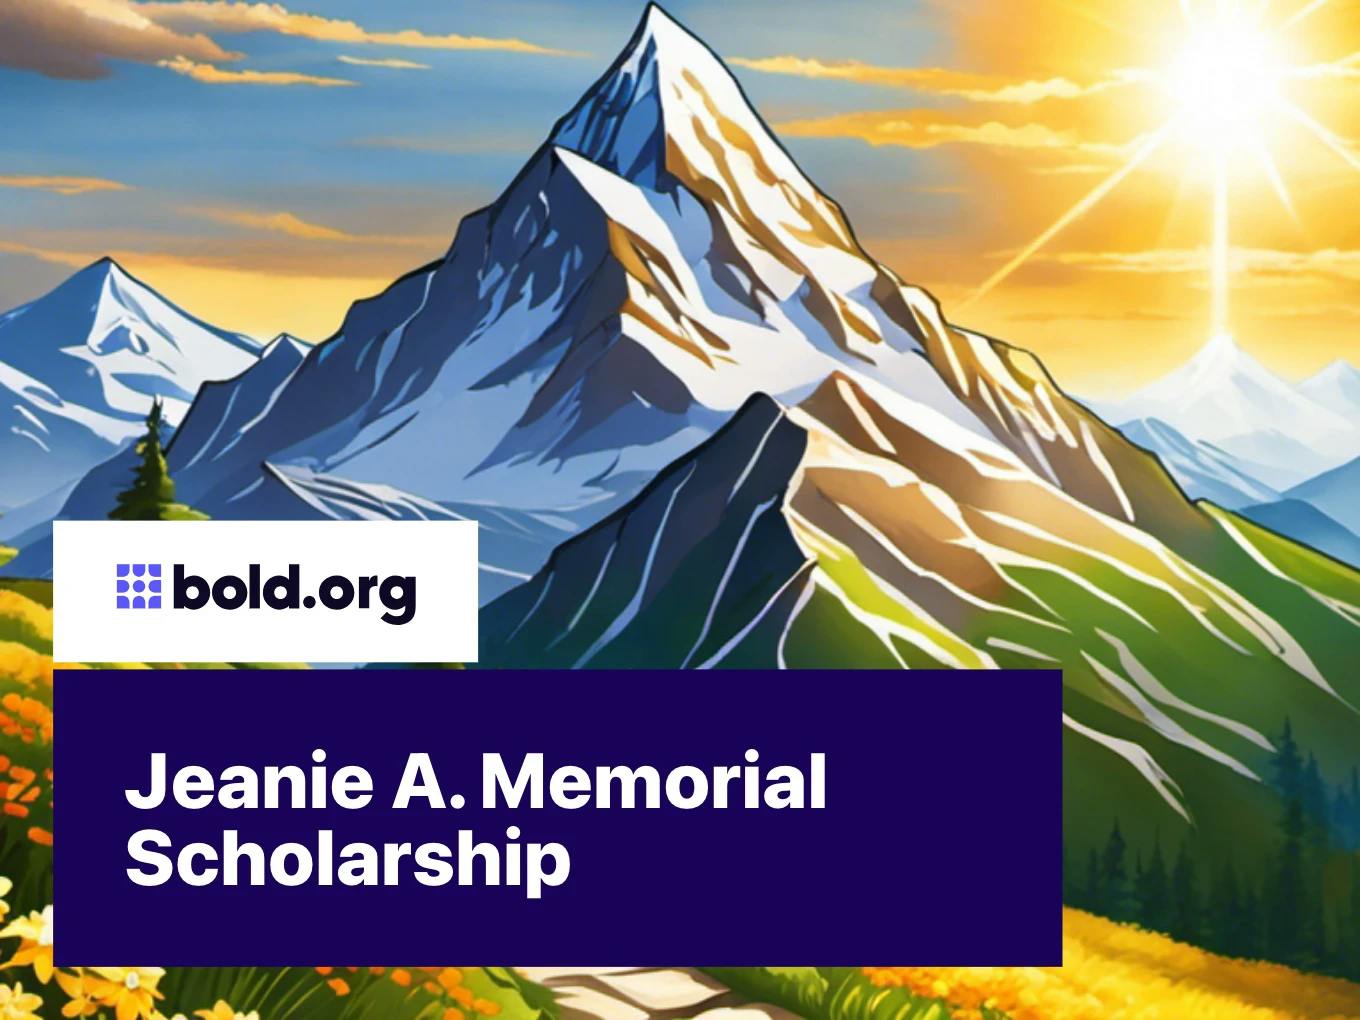 Jeanie A. Memorial Scholarship